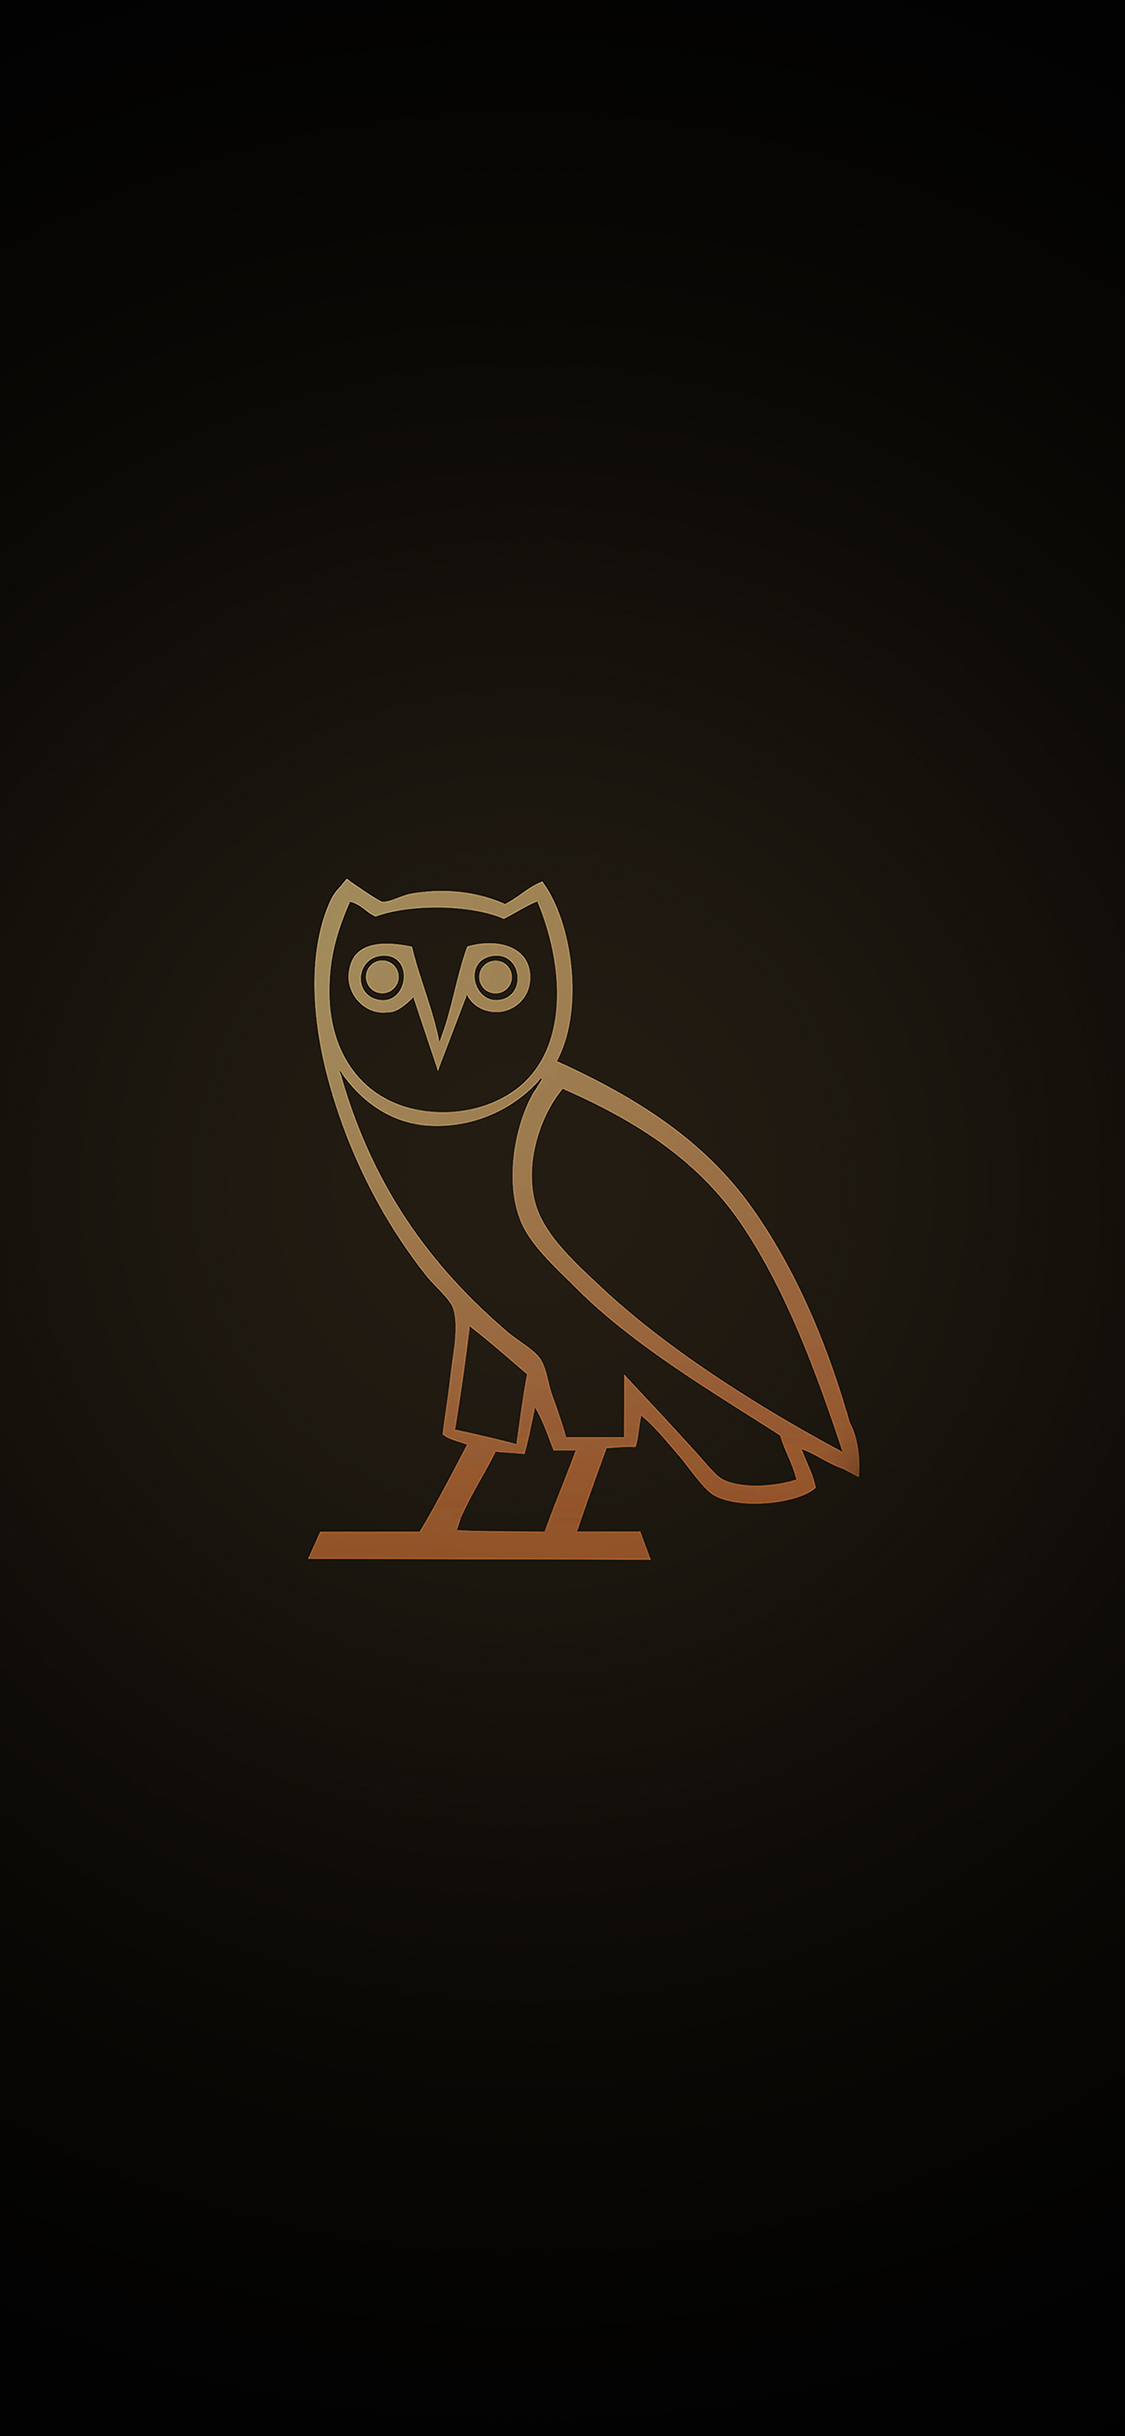 1125x2436 ac82-wallpaper-ovo-owl-logo-dark-minimal